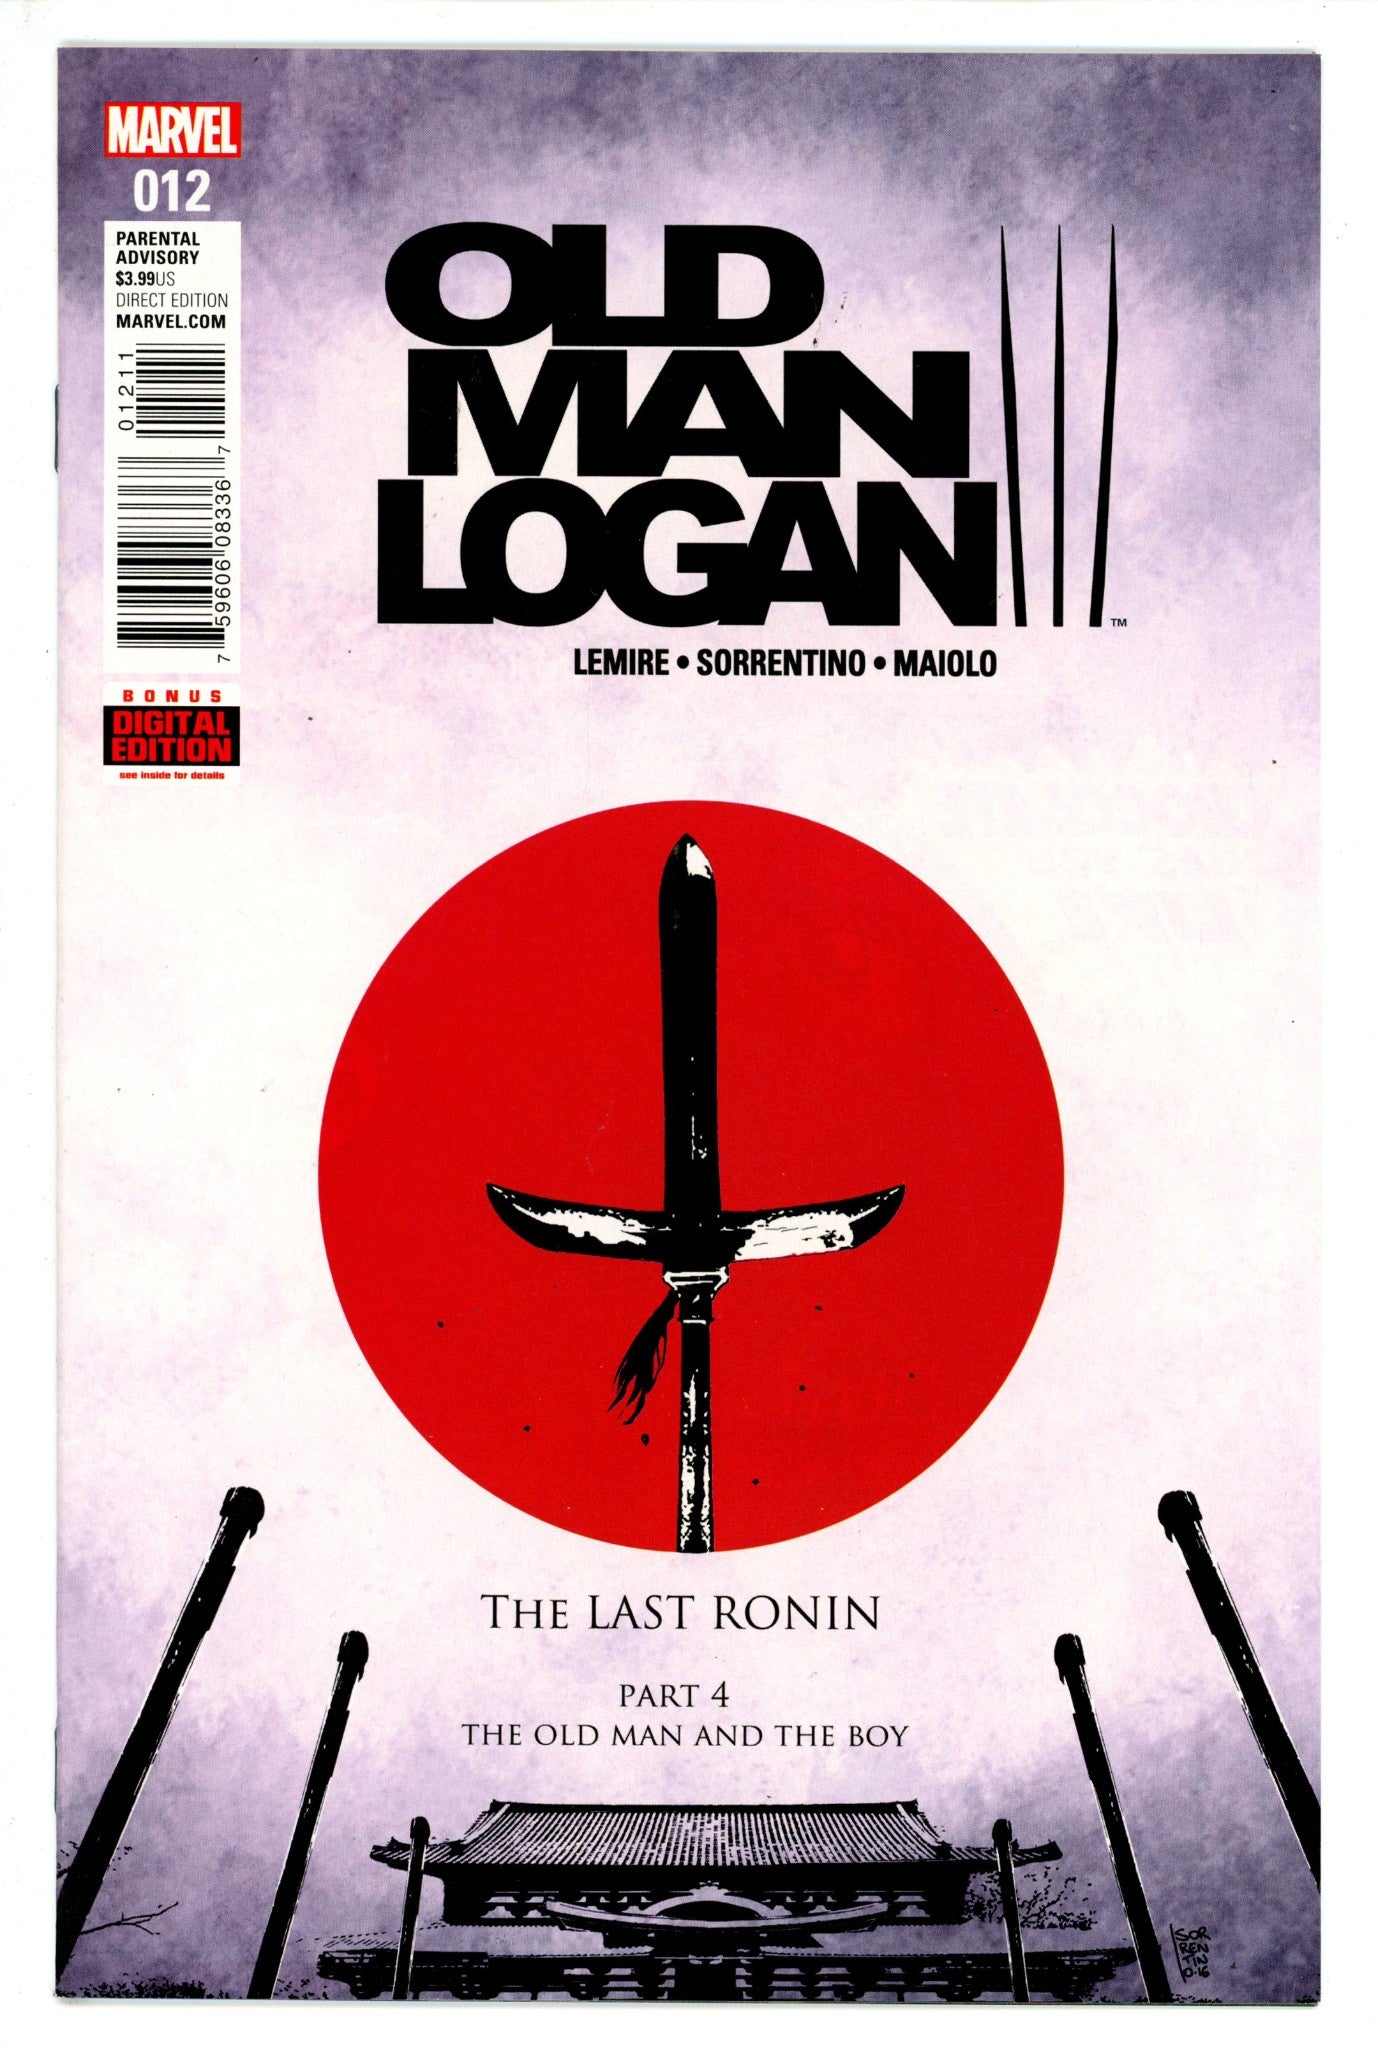 Old Man Logan Vol 2 12 (2016)